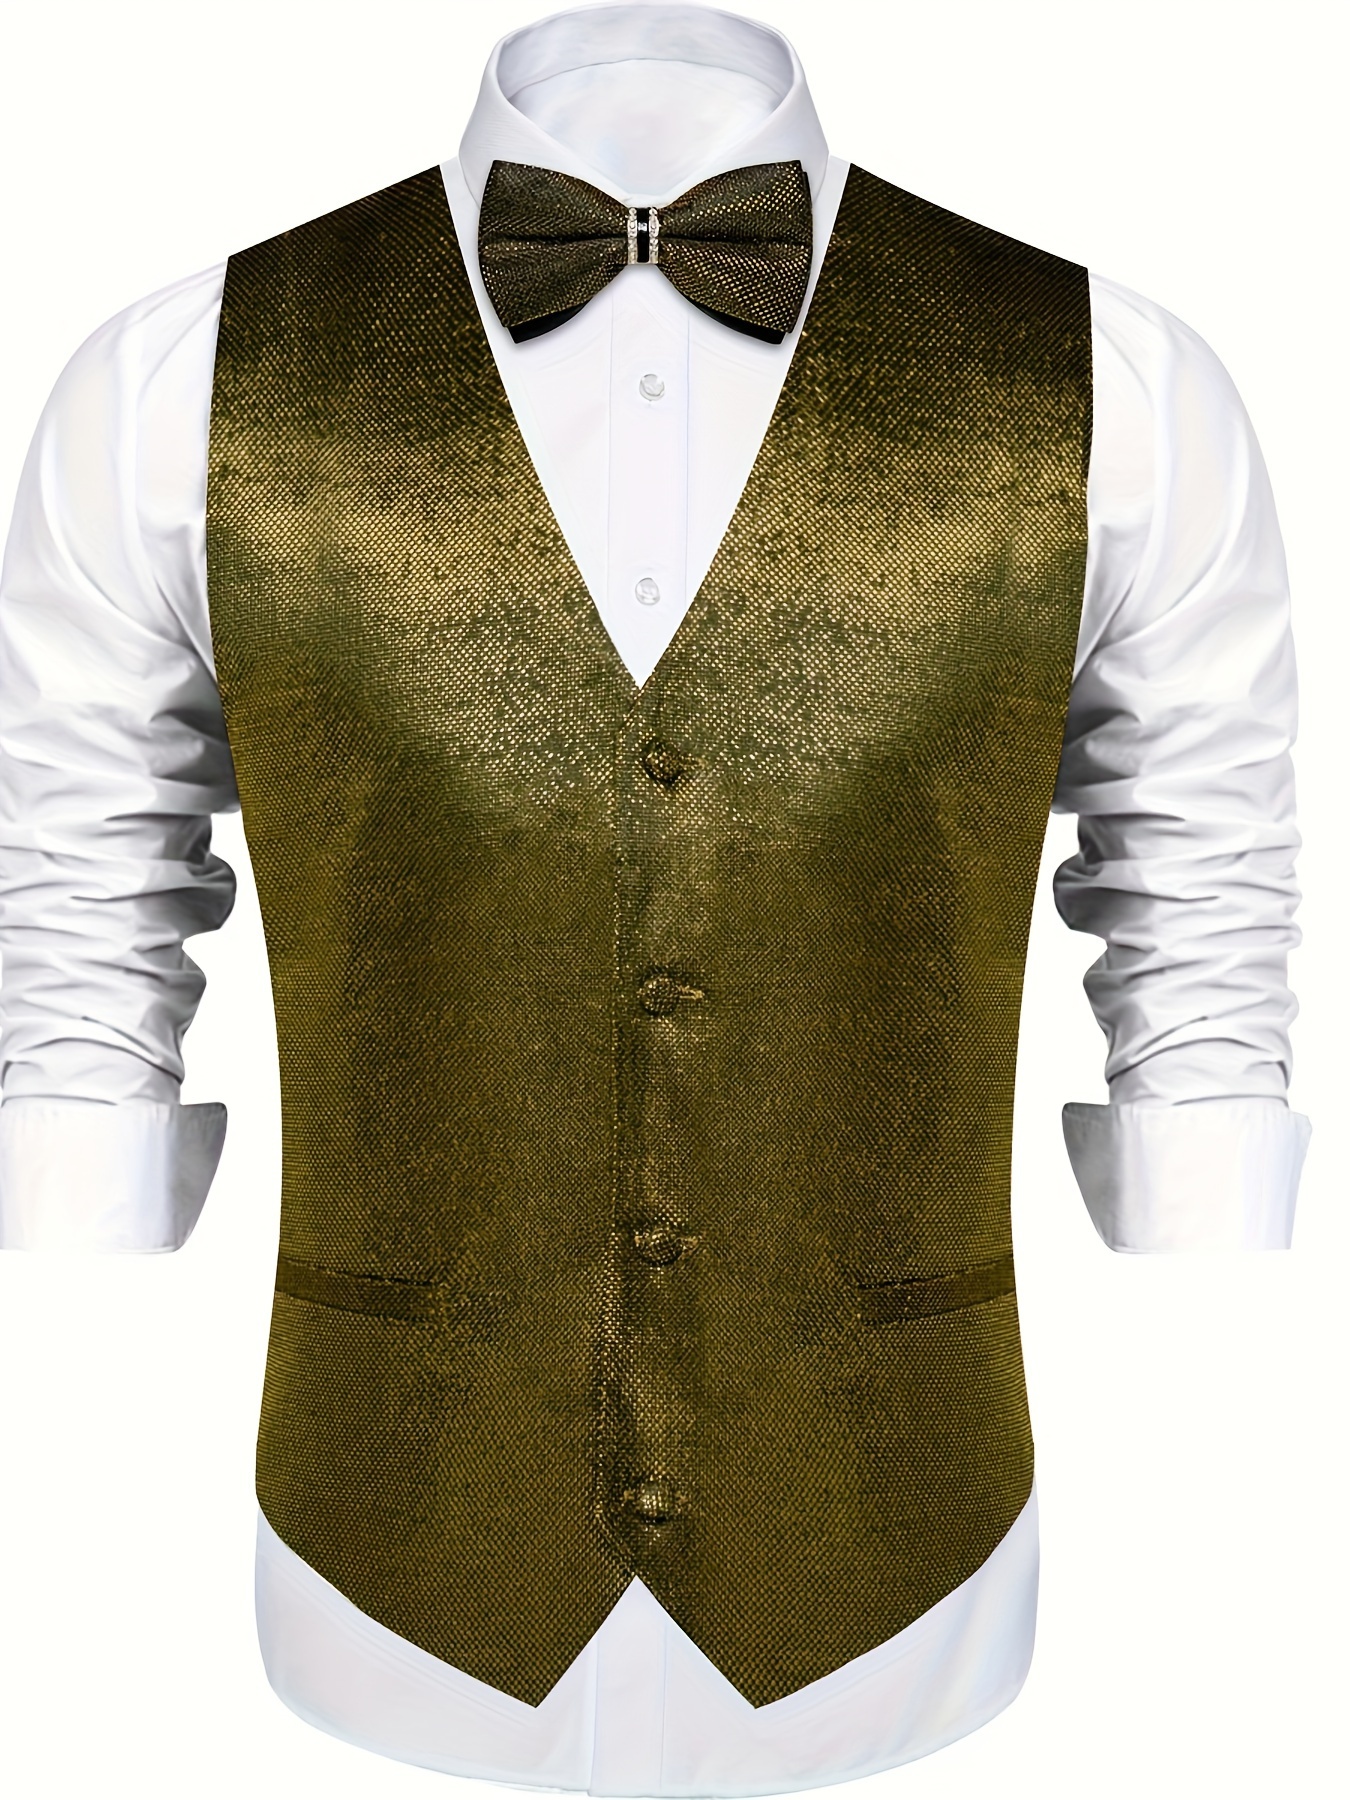 mens classic retro style single breasted waistcoat elegant v neck sleeveless suit vest with adjustable back belt casual wedding banquet vest